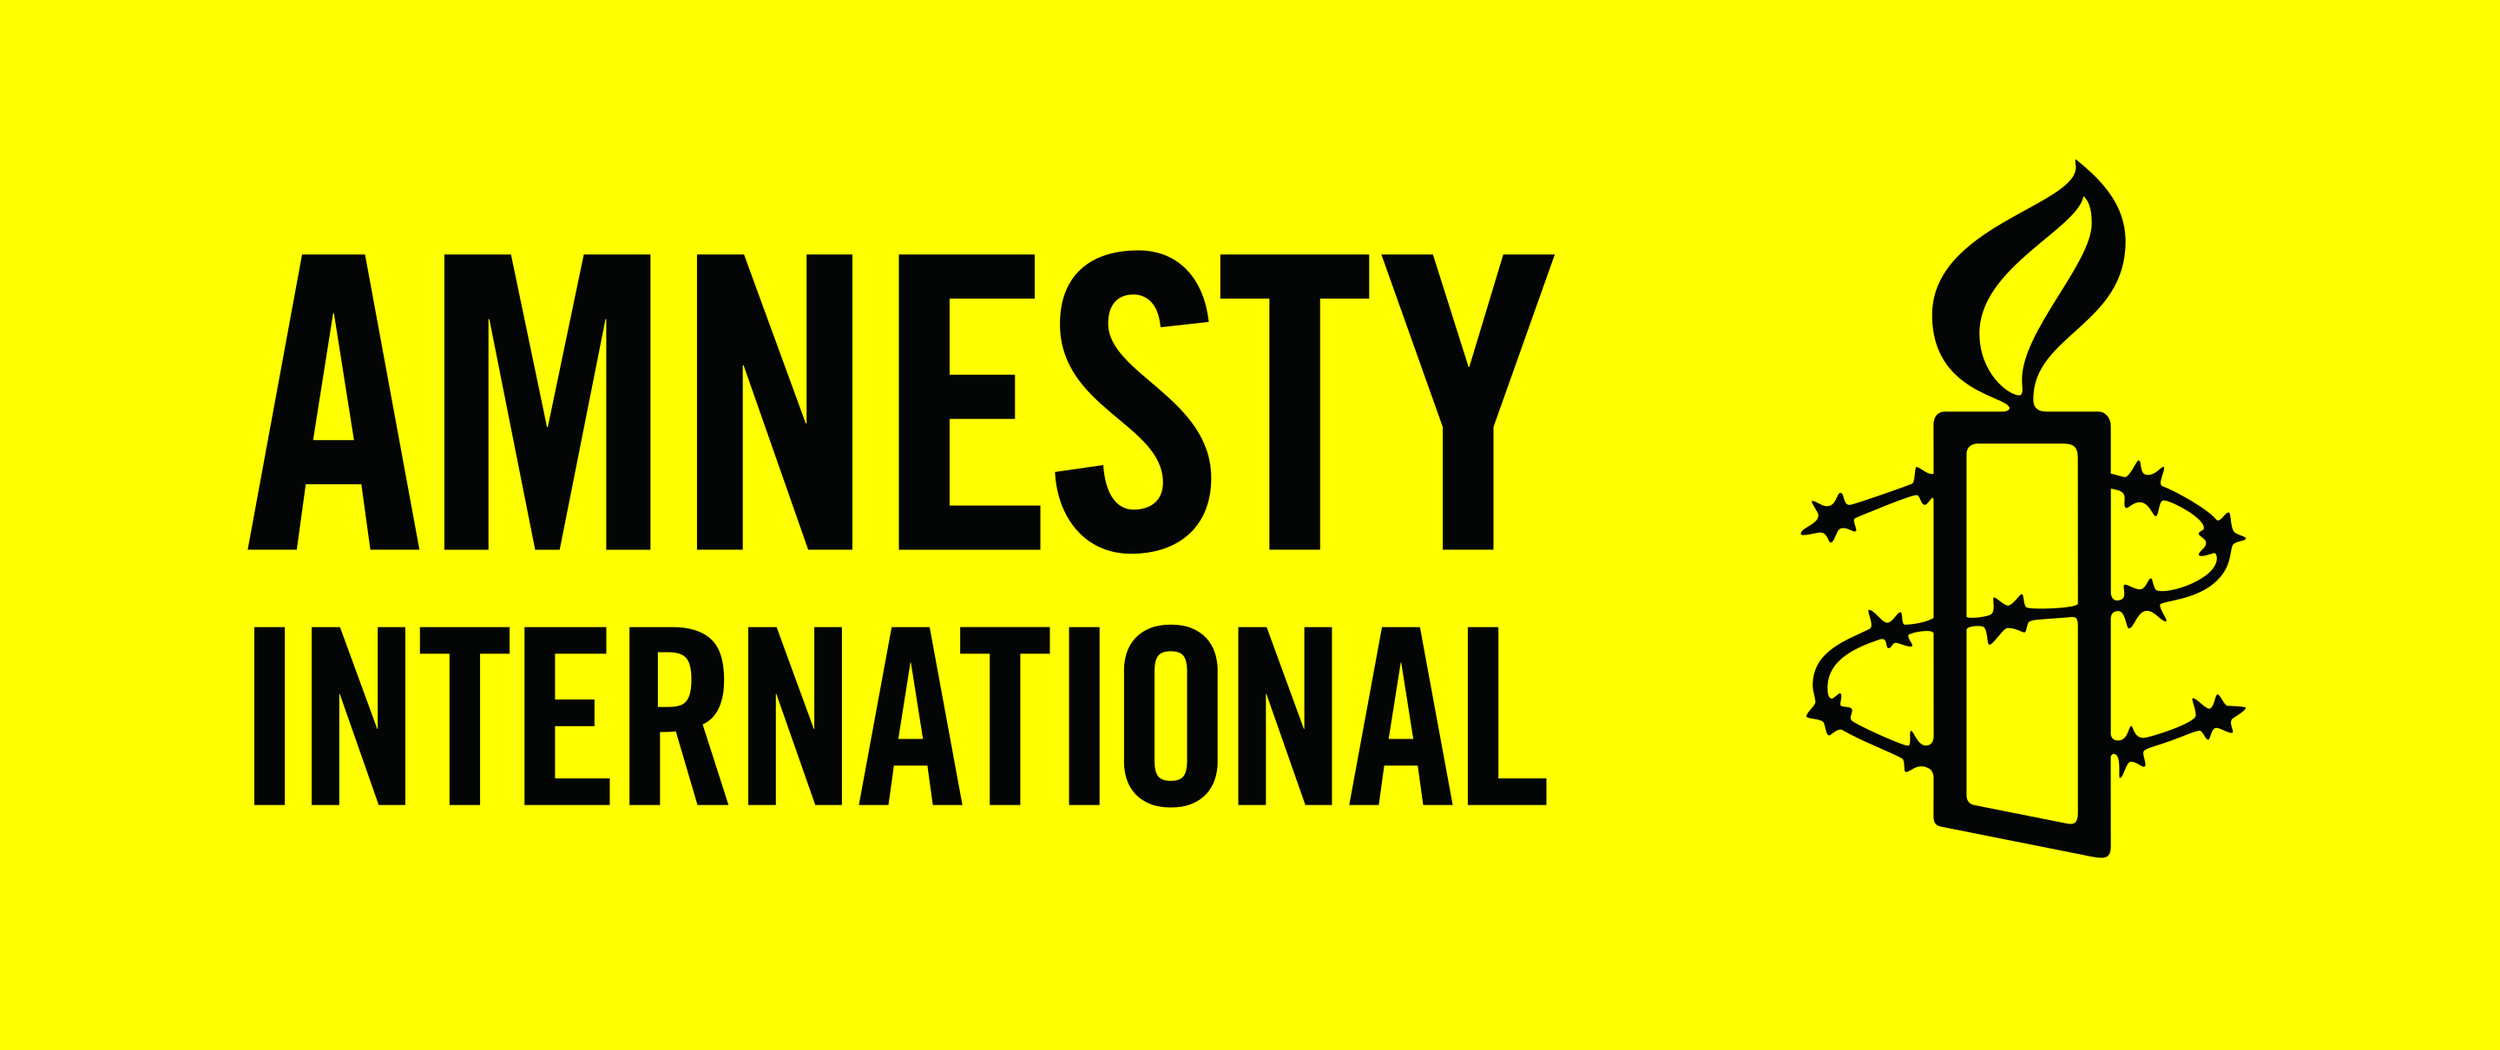 2880px-Amnesty_International_logo.svg.png